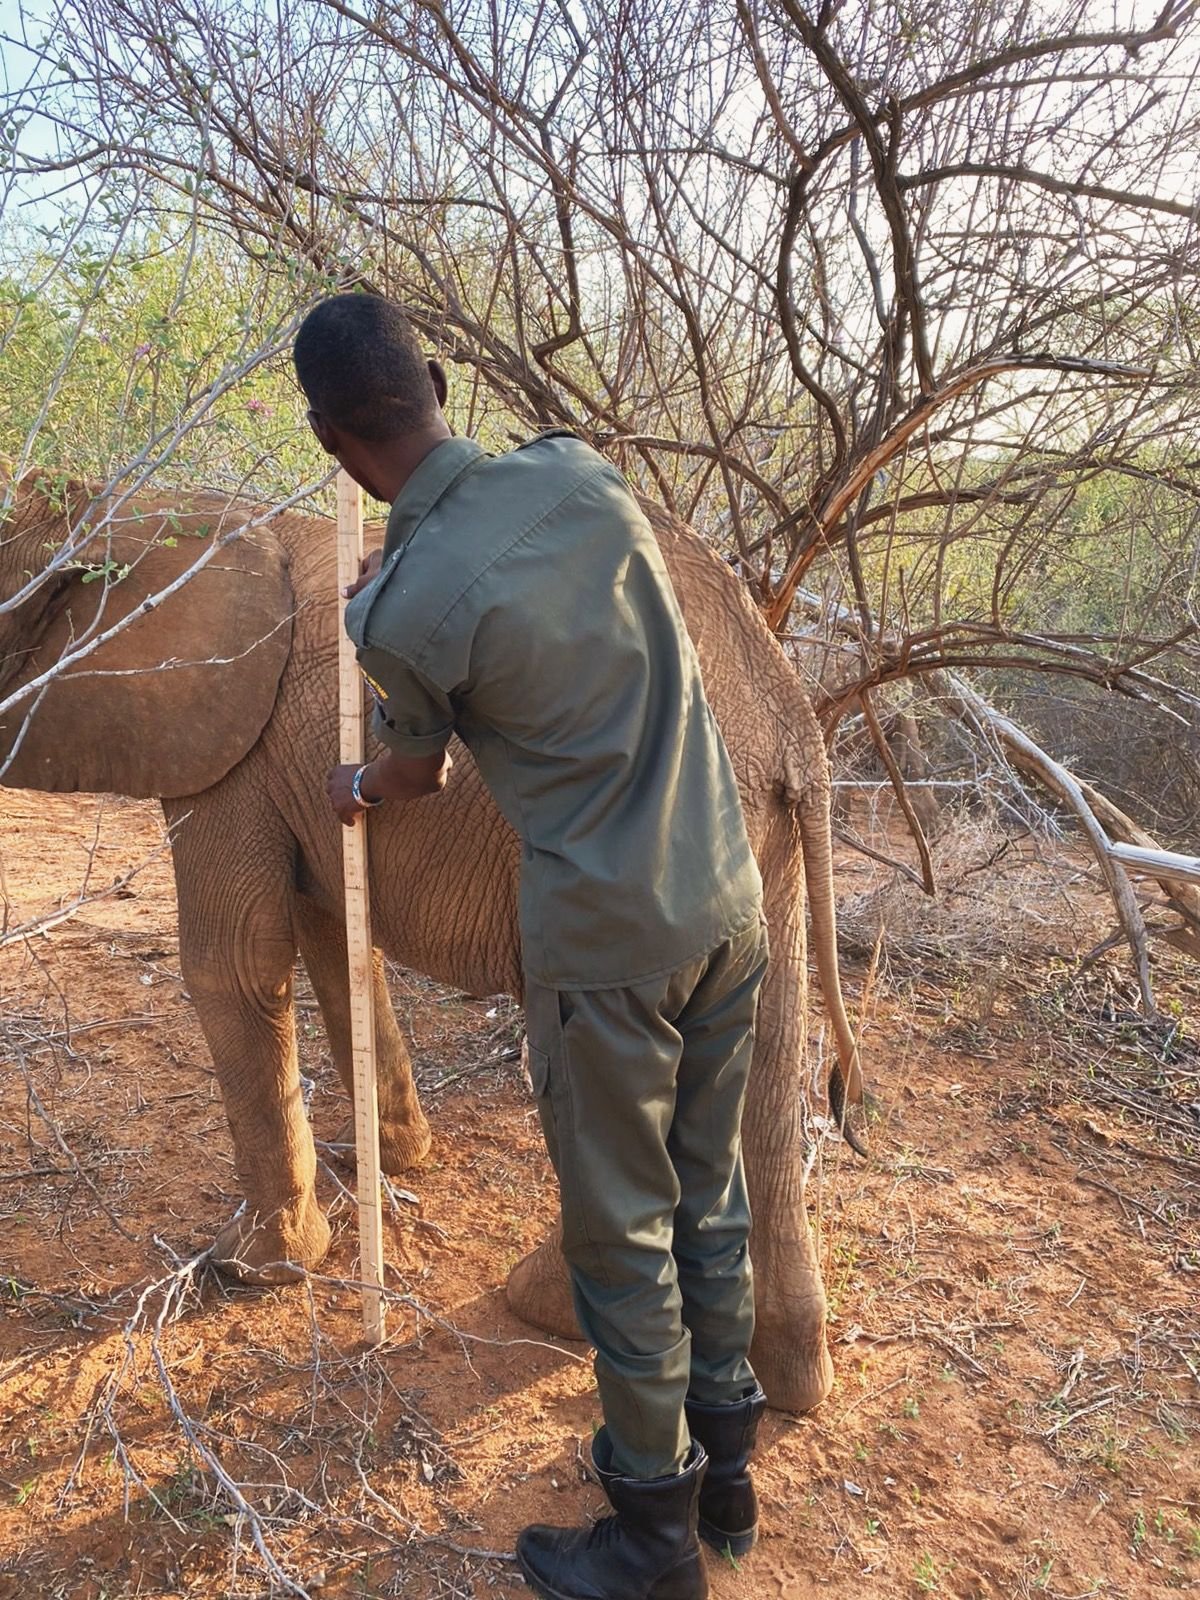 Measuring elephants' body conditioning